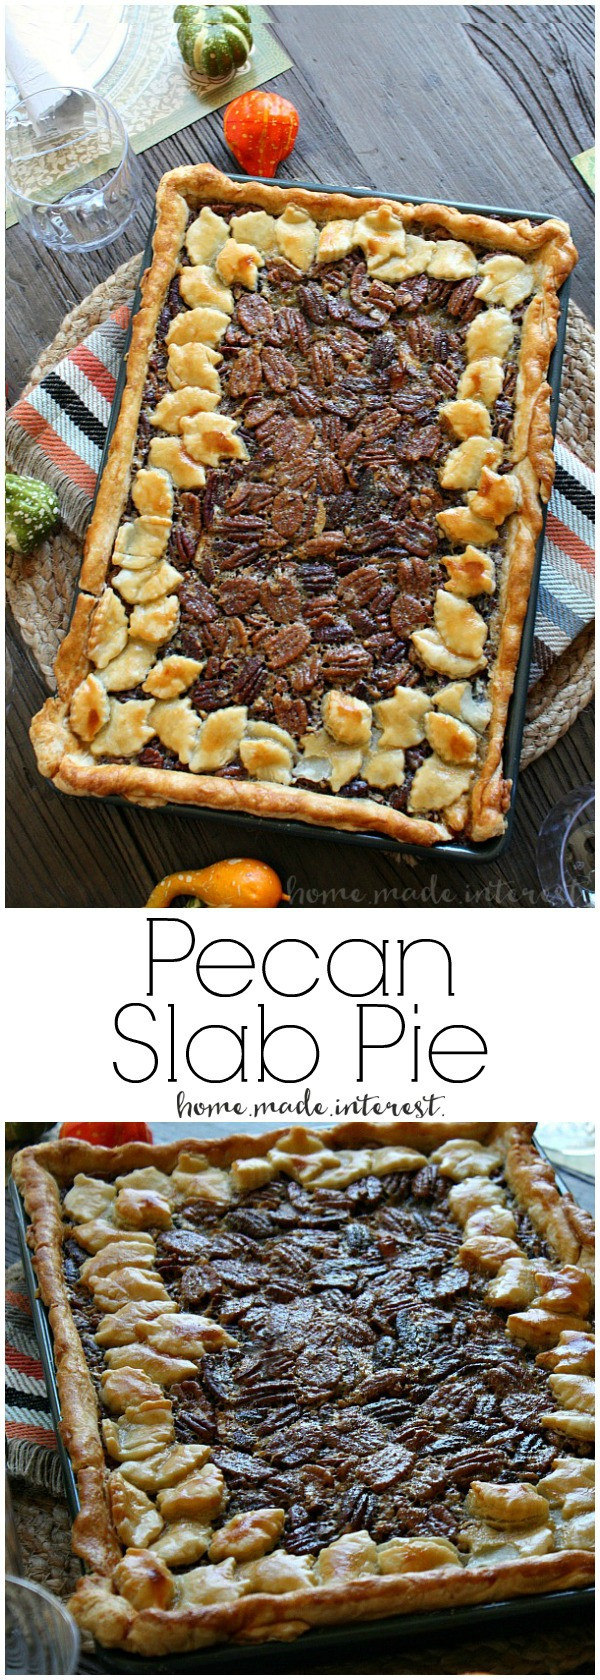 Pecan Slab Pie
 Pecan Slab Pie Home Made Interest